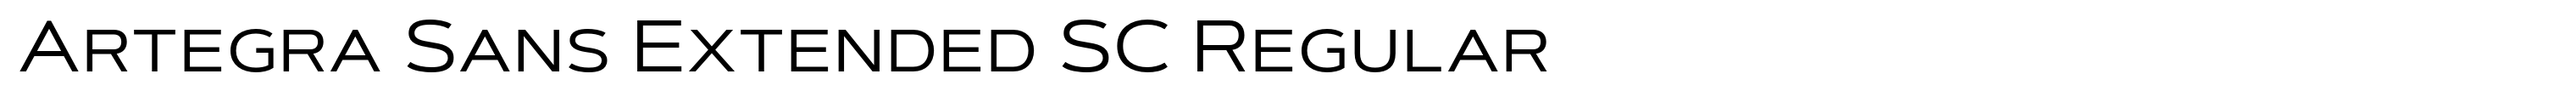 Artegra Sans Extended SC Regular